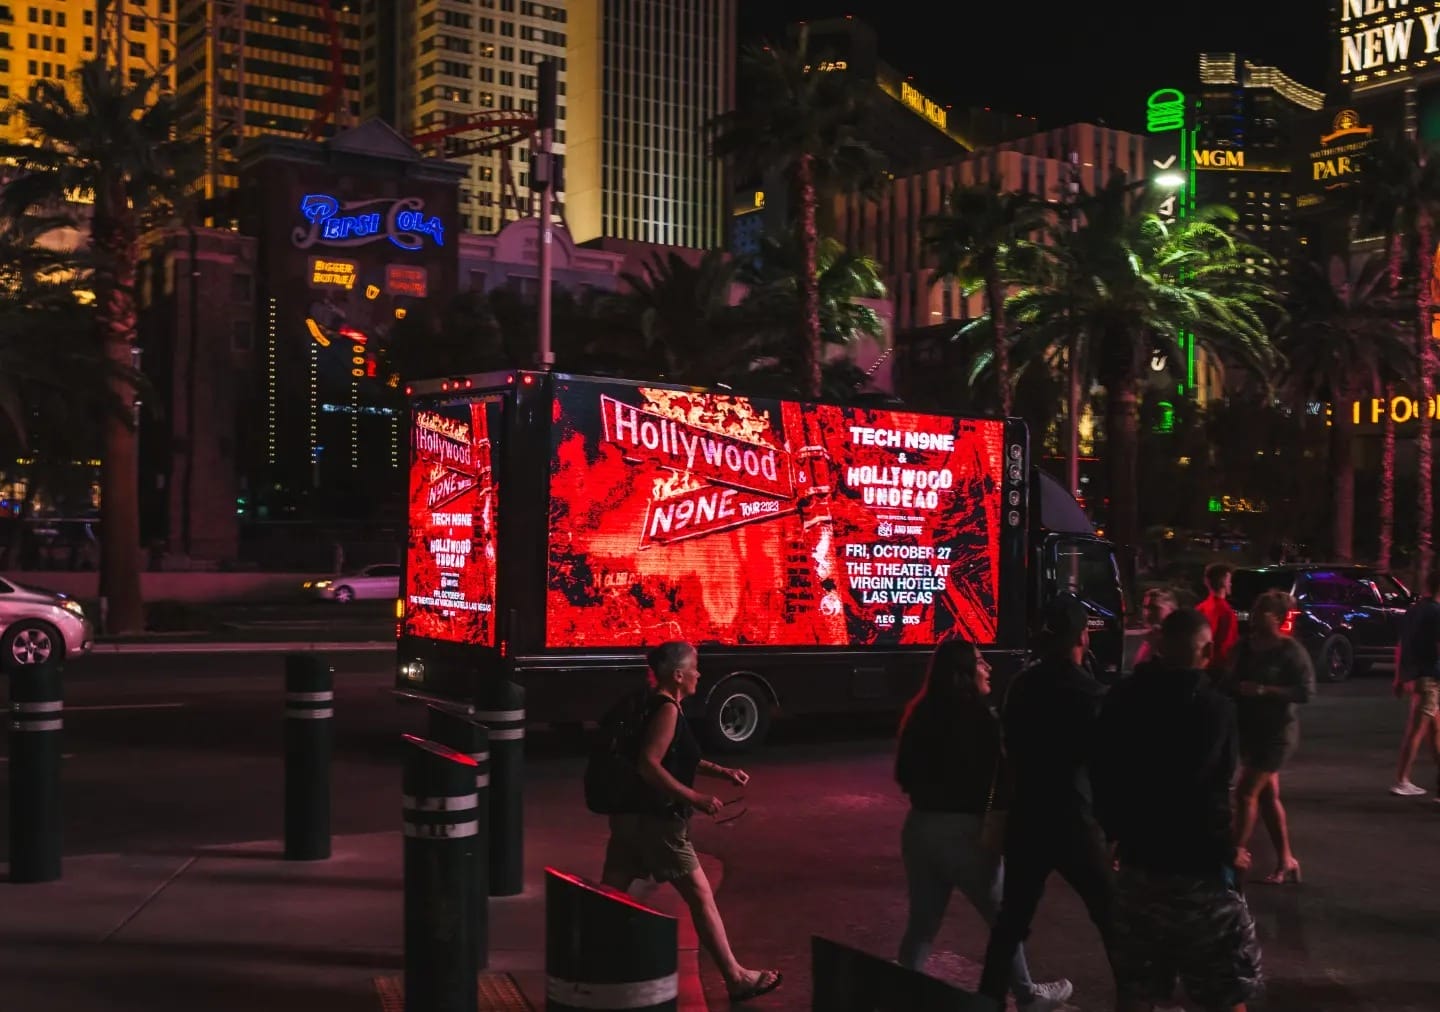 Mobile billboard advertising a concert in Las Vegas.